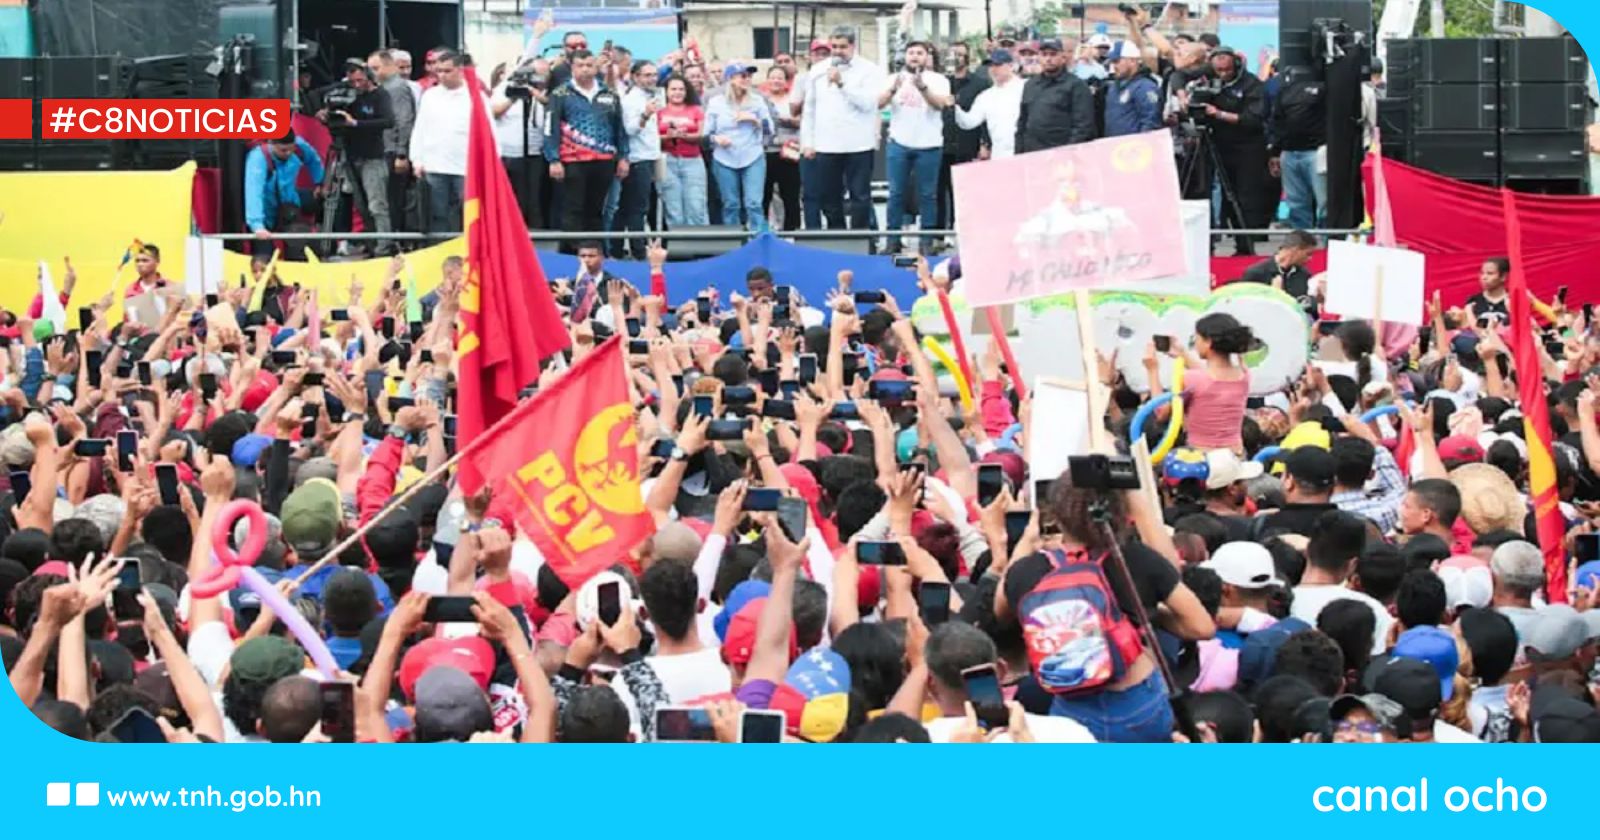 Presidente venezolano reitera denuncia sobre planes de la derecha fascista